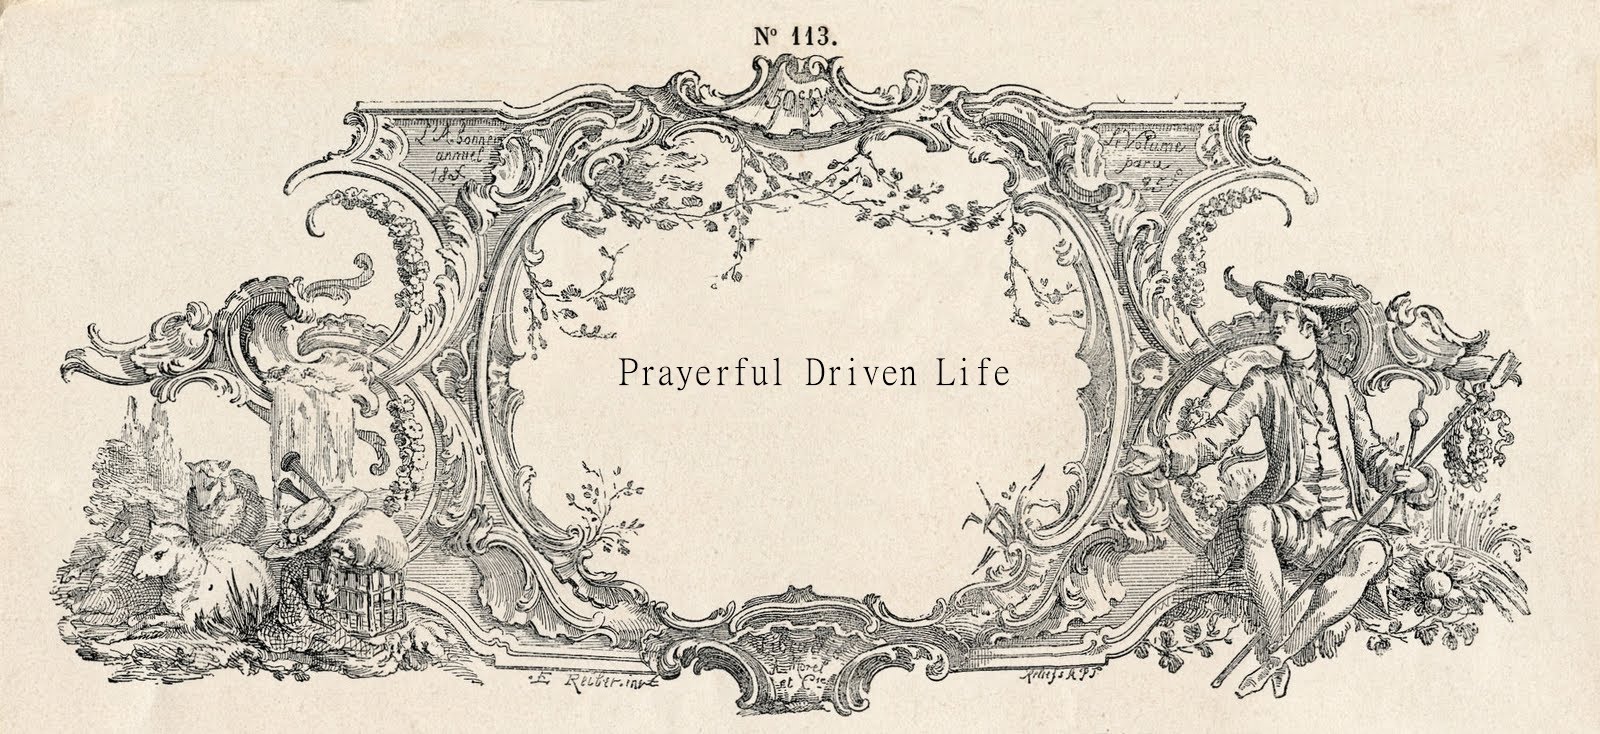 Prayerful Driven Life